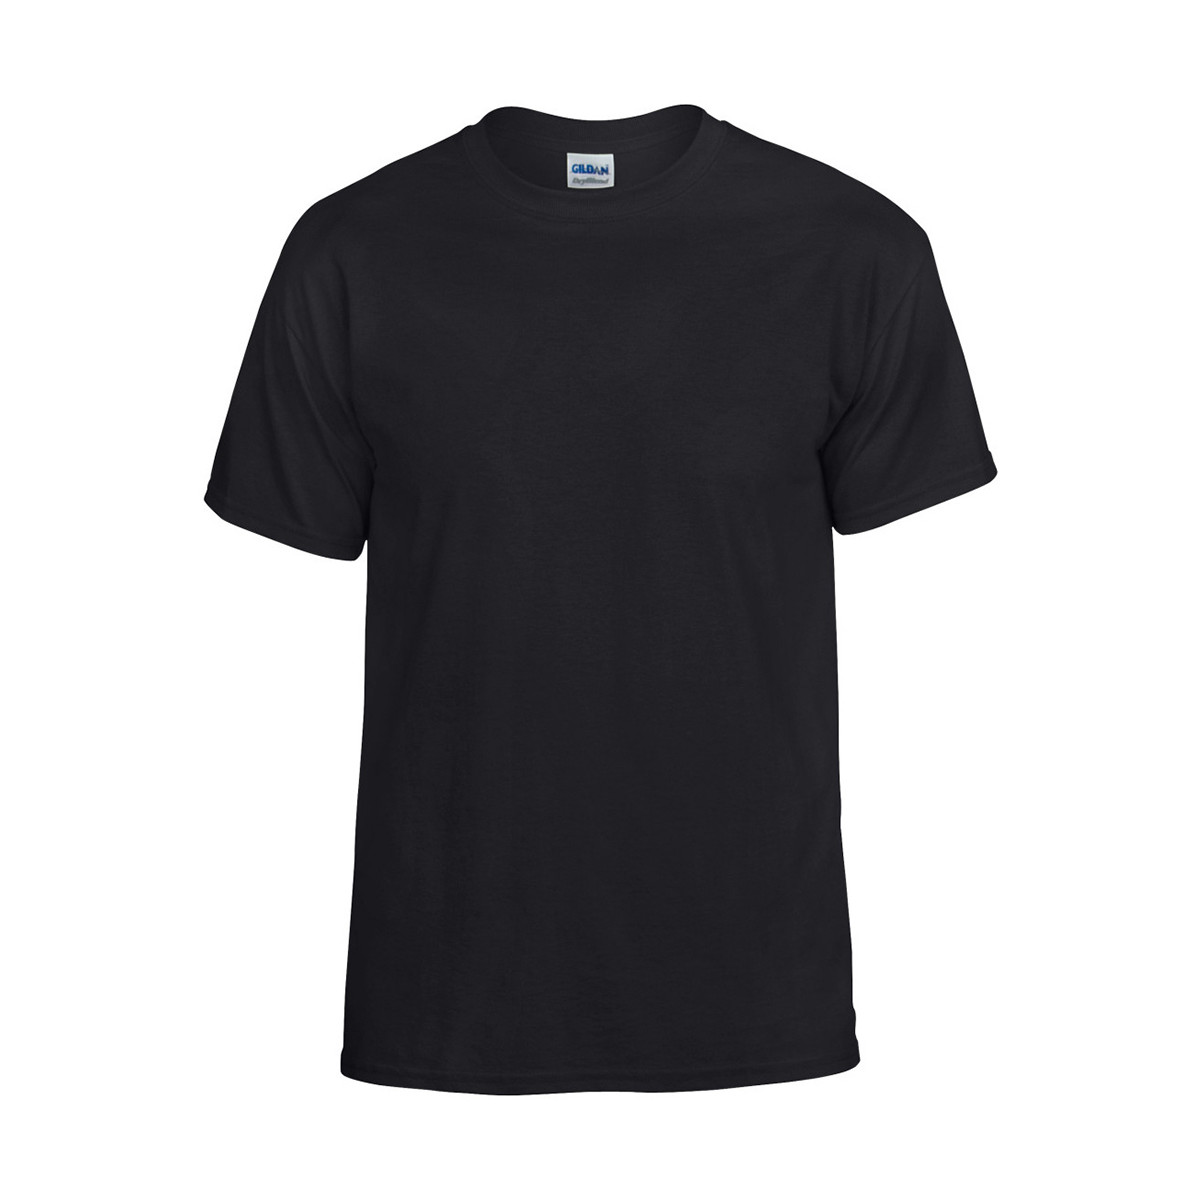 textil Camisetas manga corta Gildan DryBlend Negro